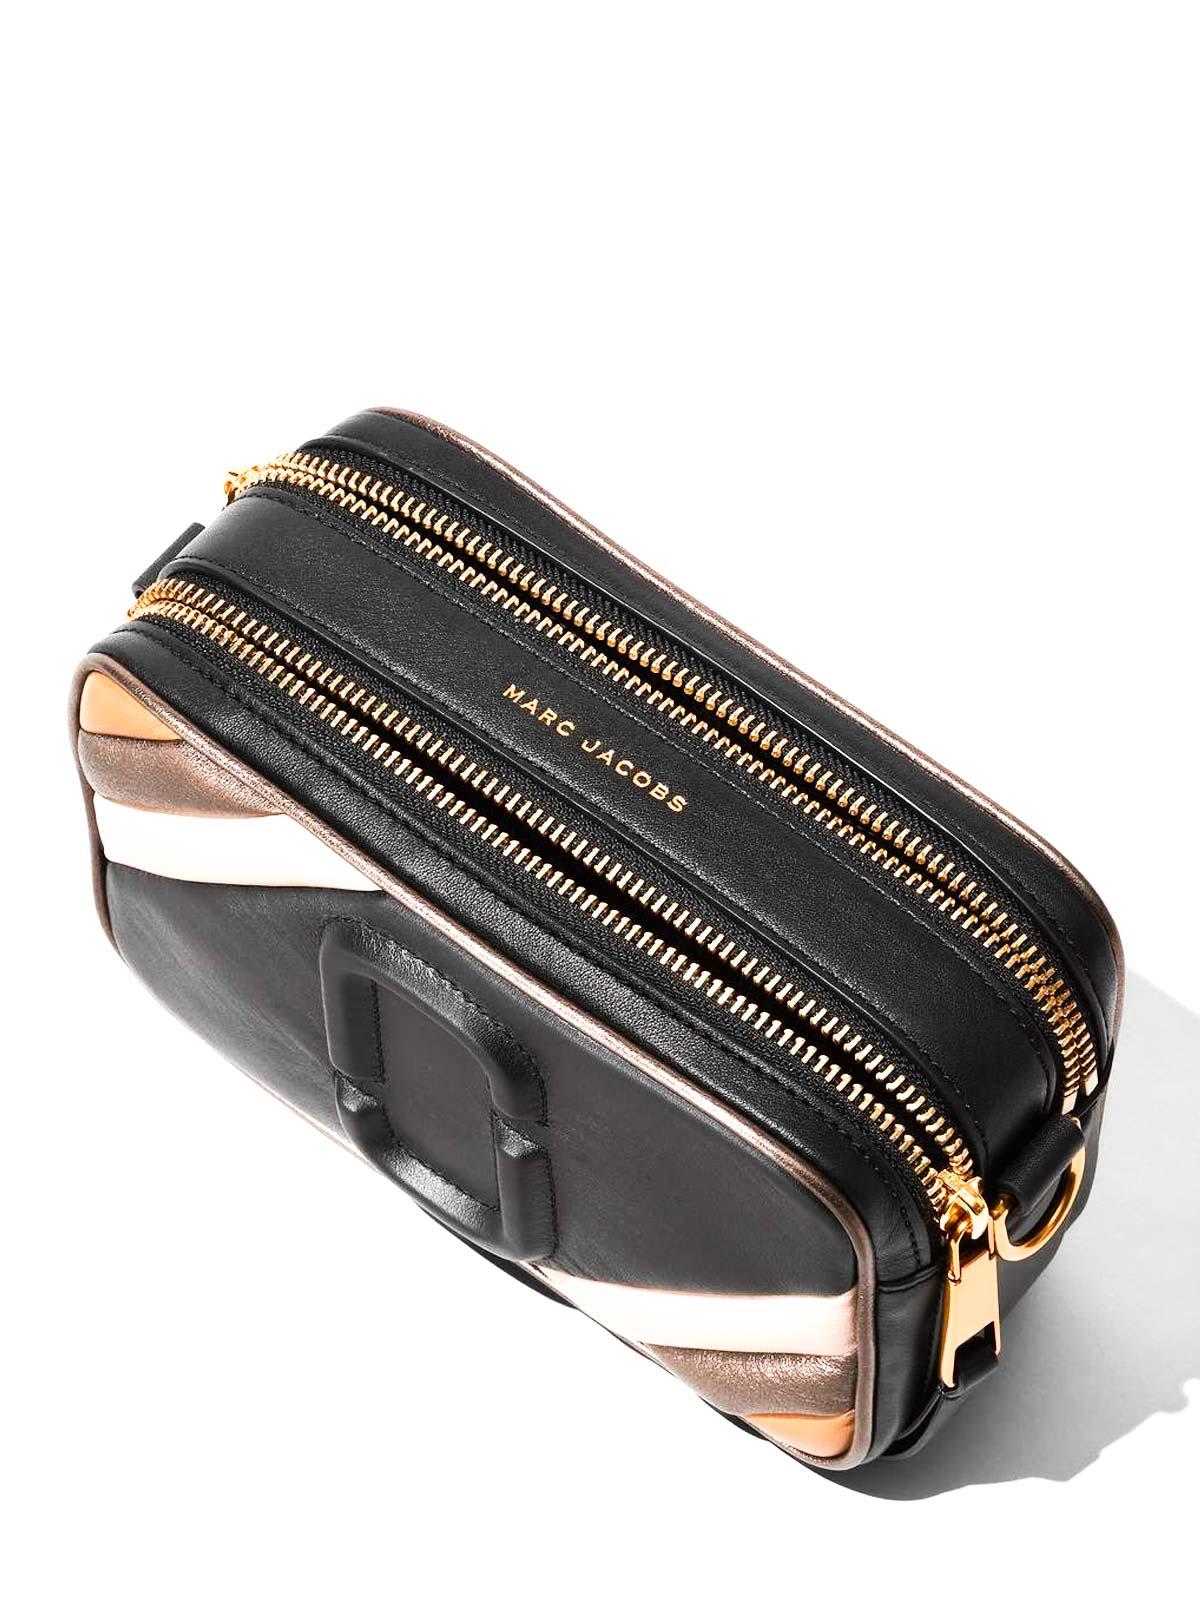 Marc Jacobs Women's The Moto Shot 21 Camera Bag, Black, One Size: Handbags